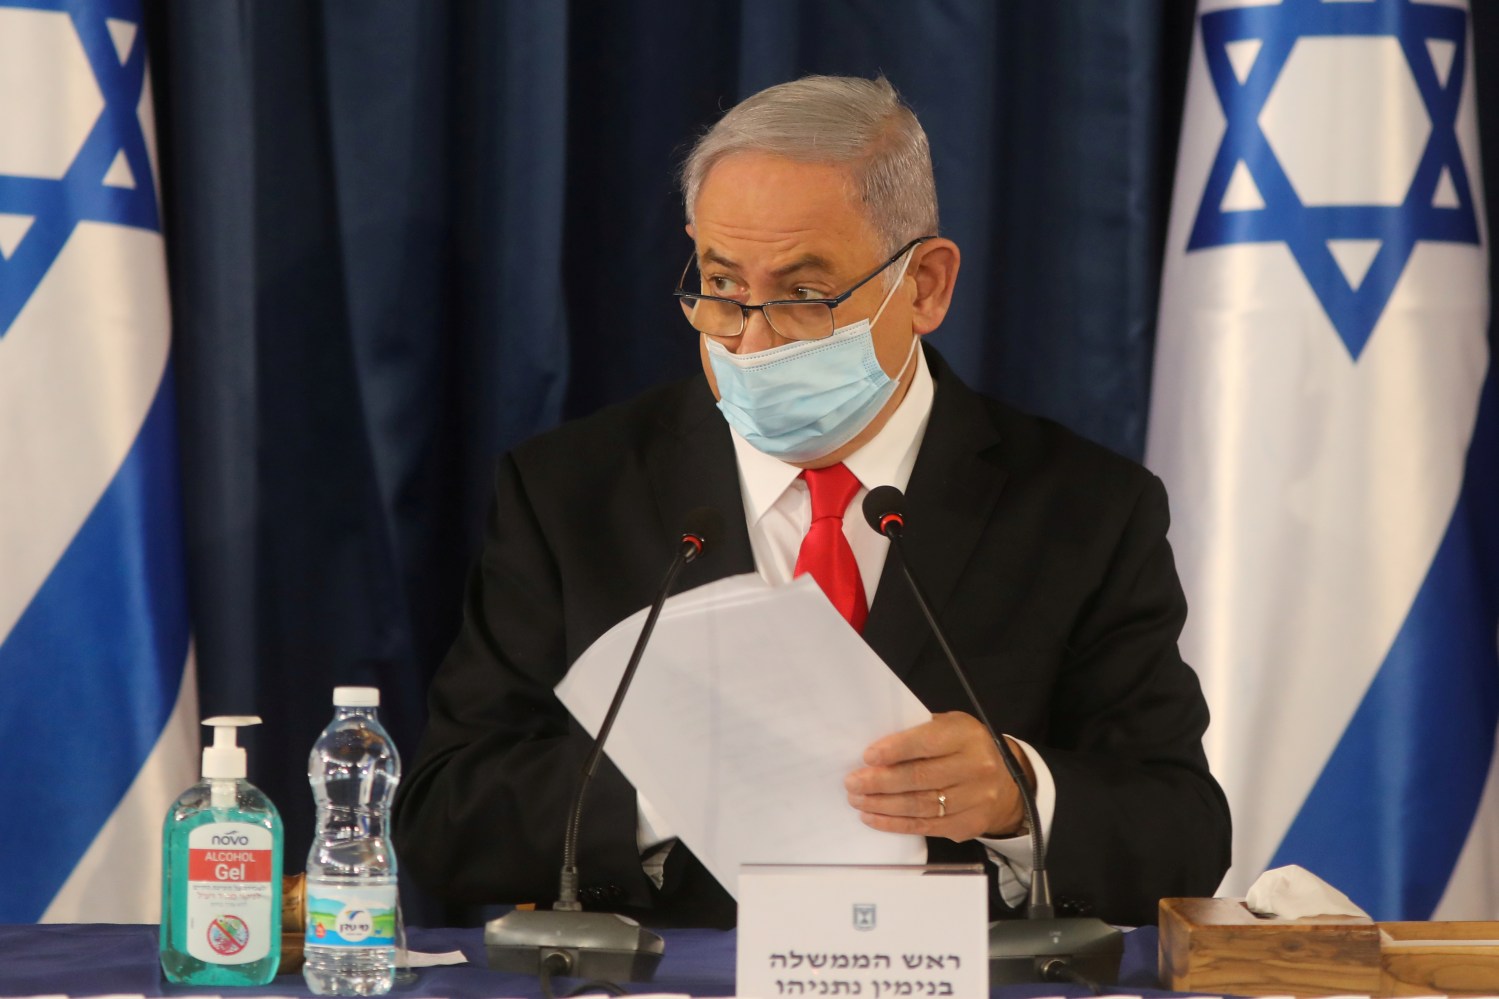 FILE PHOTO: Israeli Prime Minister Benjamin Netanyahu, wearing a protective mask due to the ongoing coronavirus disease (COVID-19) pandemic, chairs the weekly cabinet meeting in Jerusalem June 7, 2020. Menahem Kahana/Pool via REUTERS/File Photo